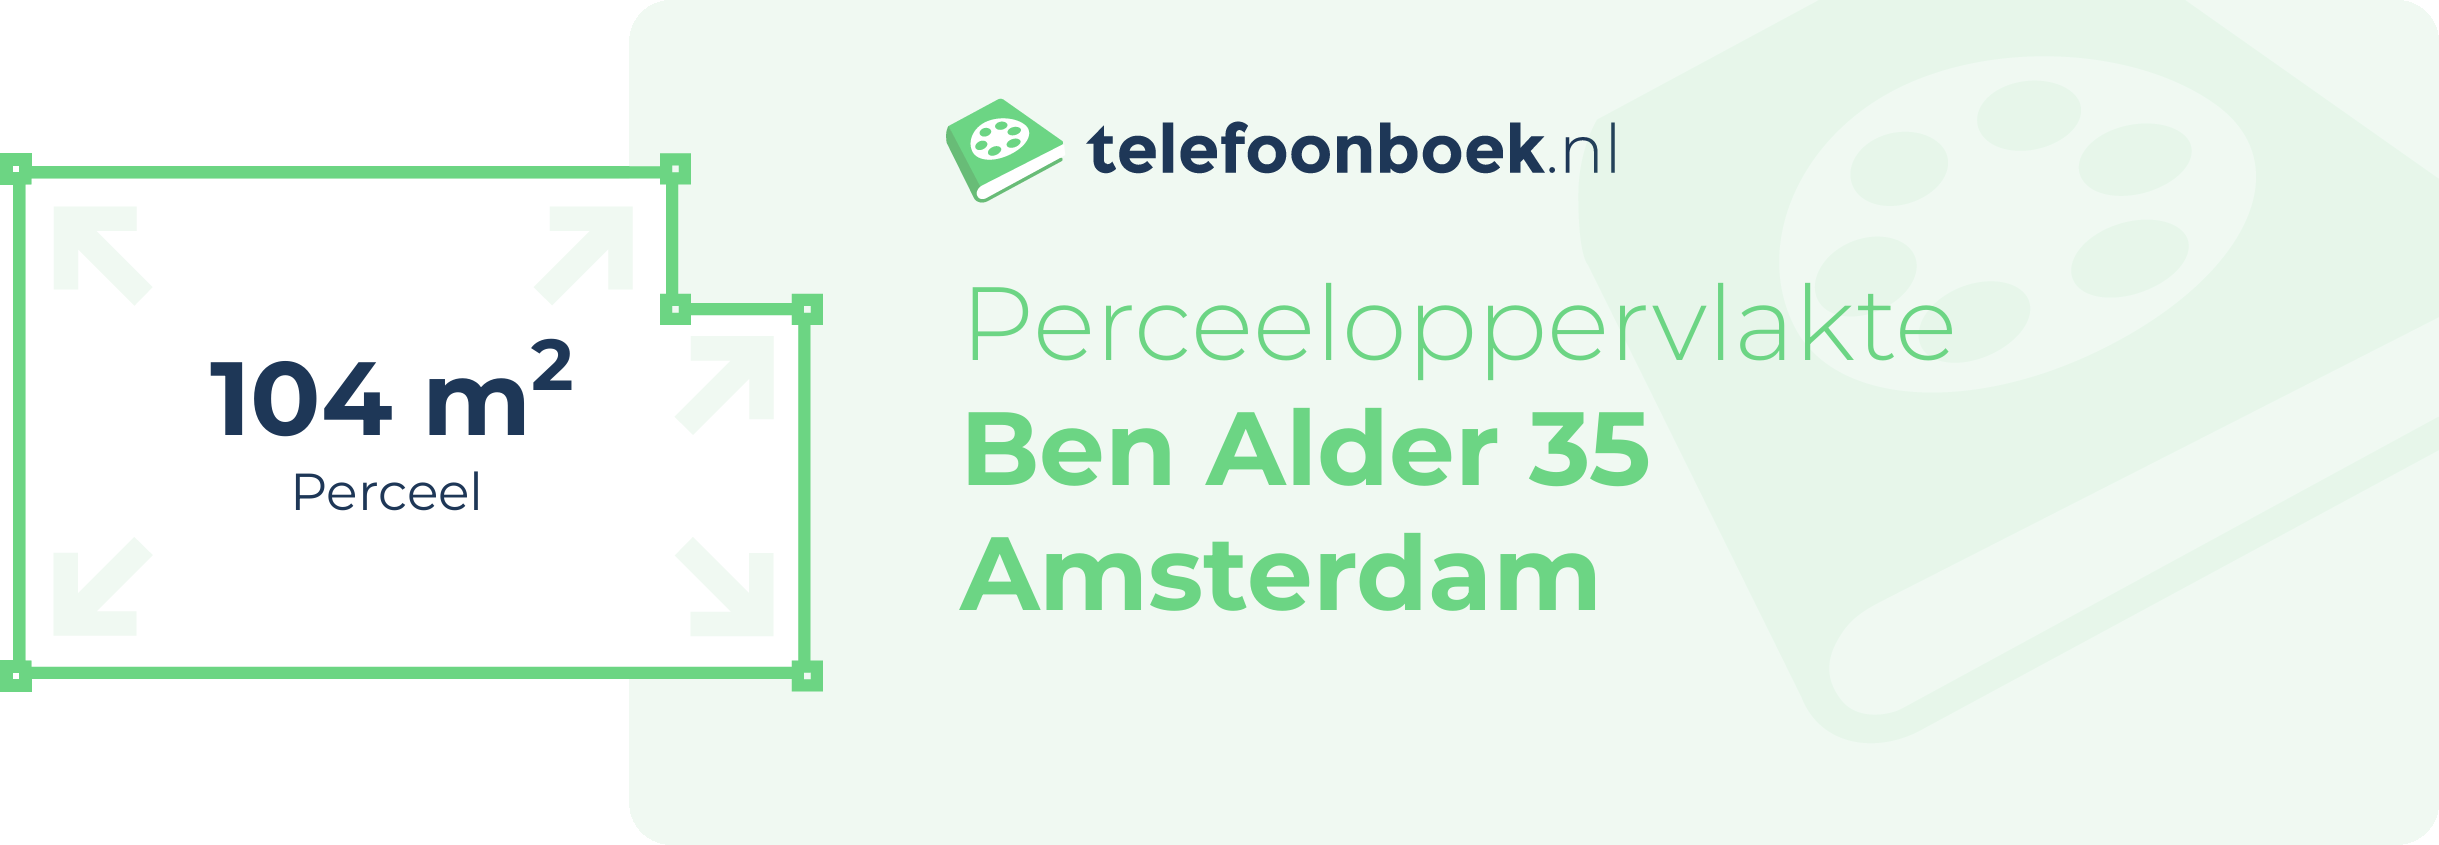 Perceeloppervlakte Ben Alder 35 Amsterdam